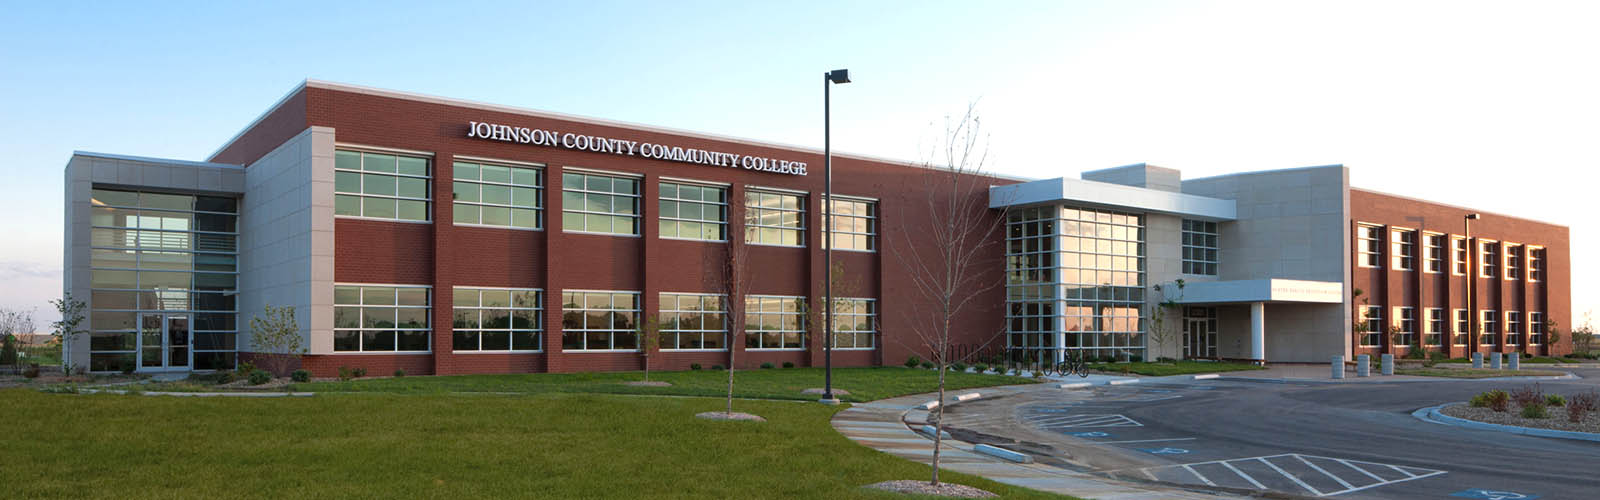 Johnson County Community College